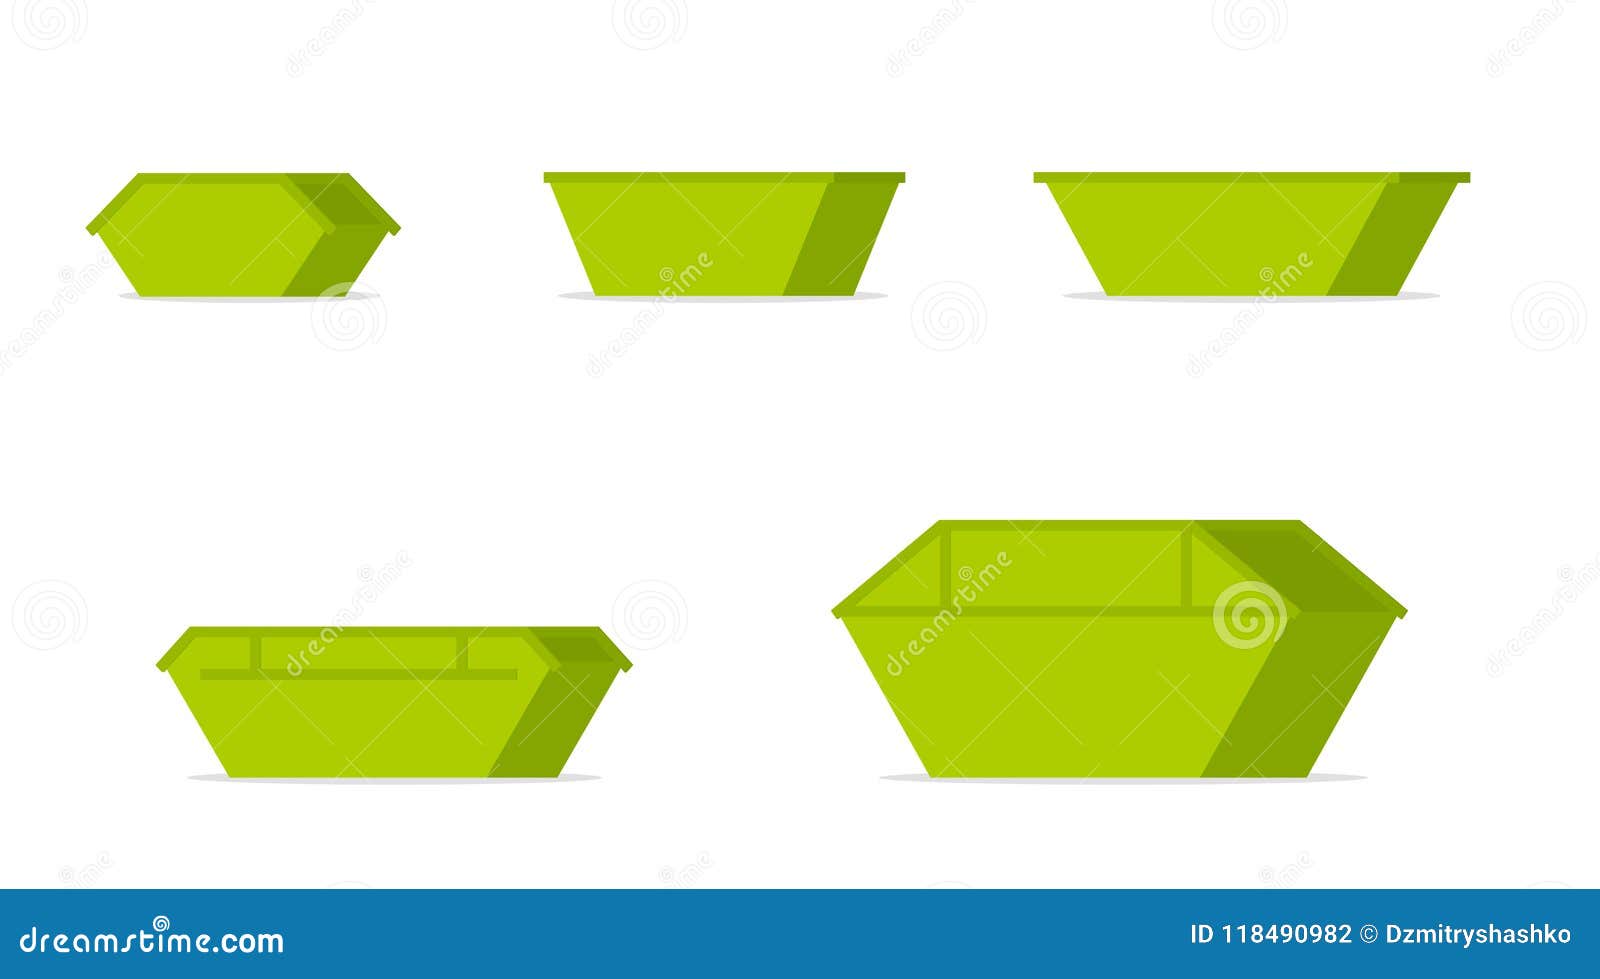 green waste skip bin icon set